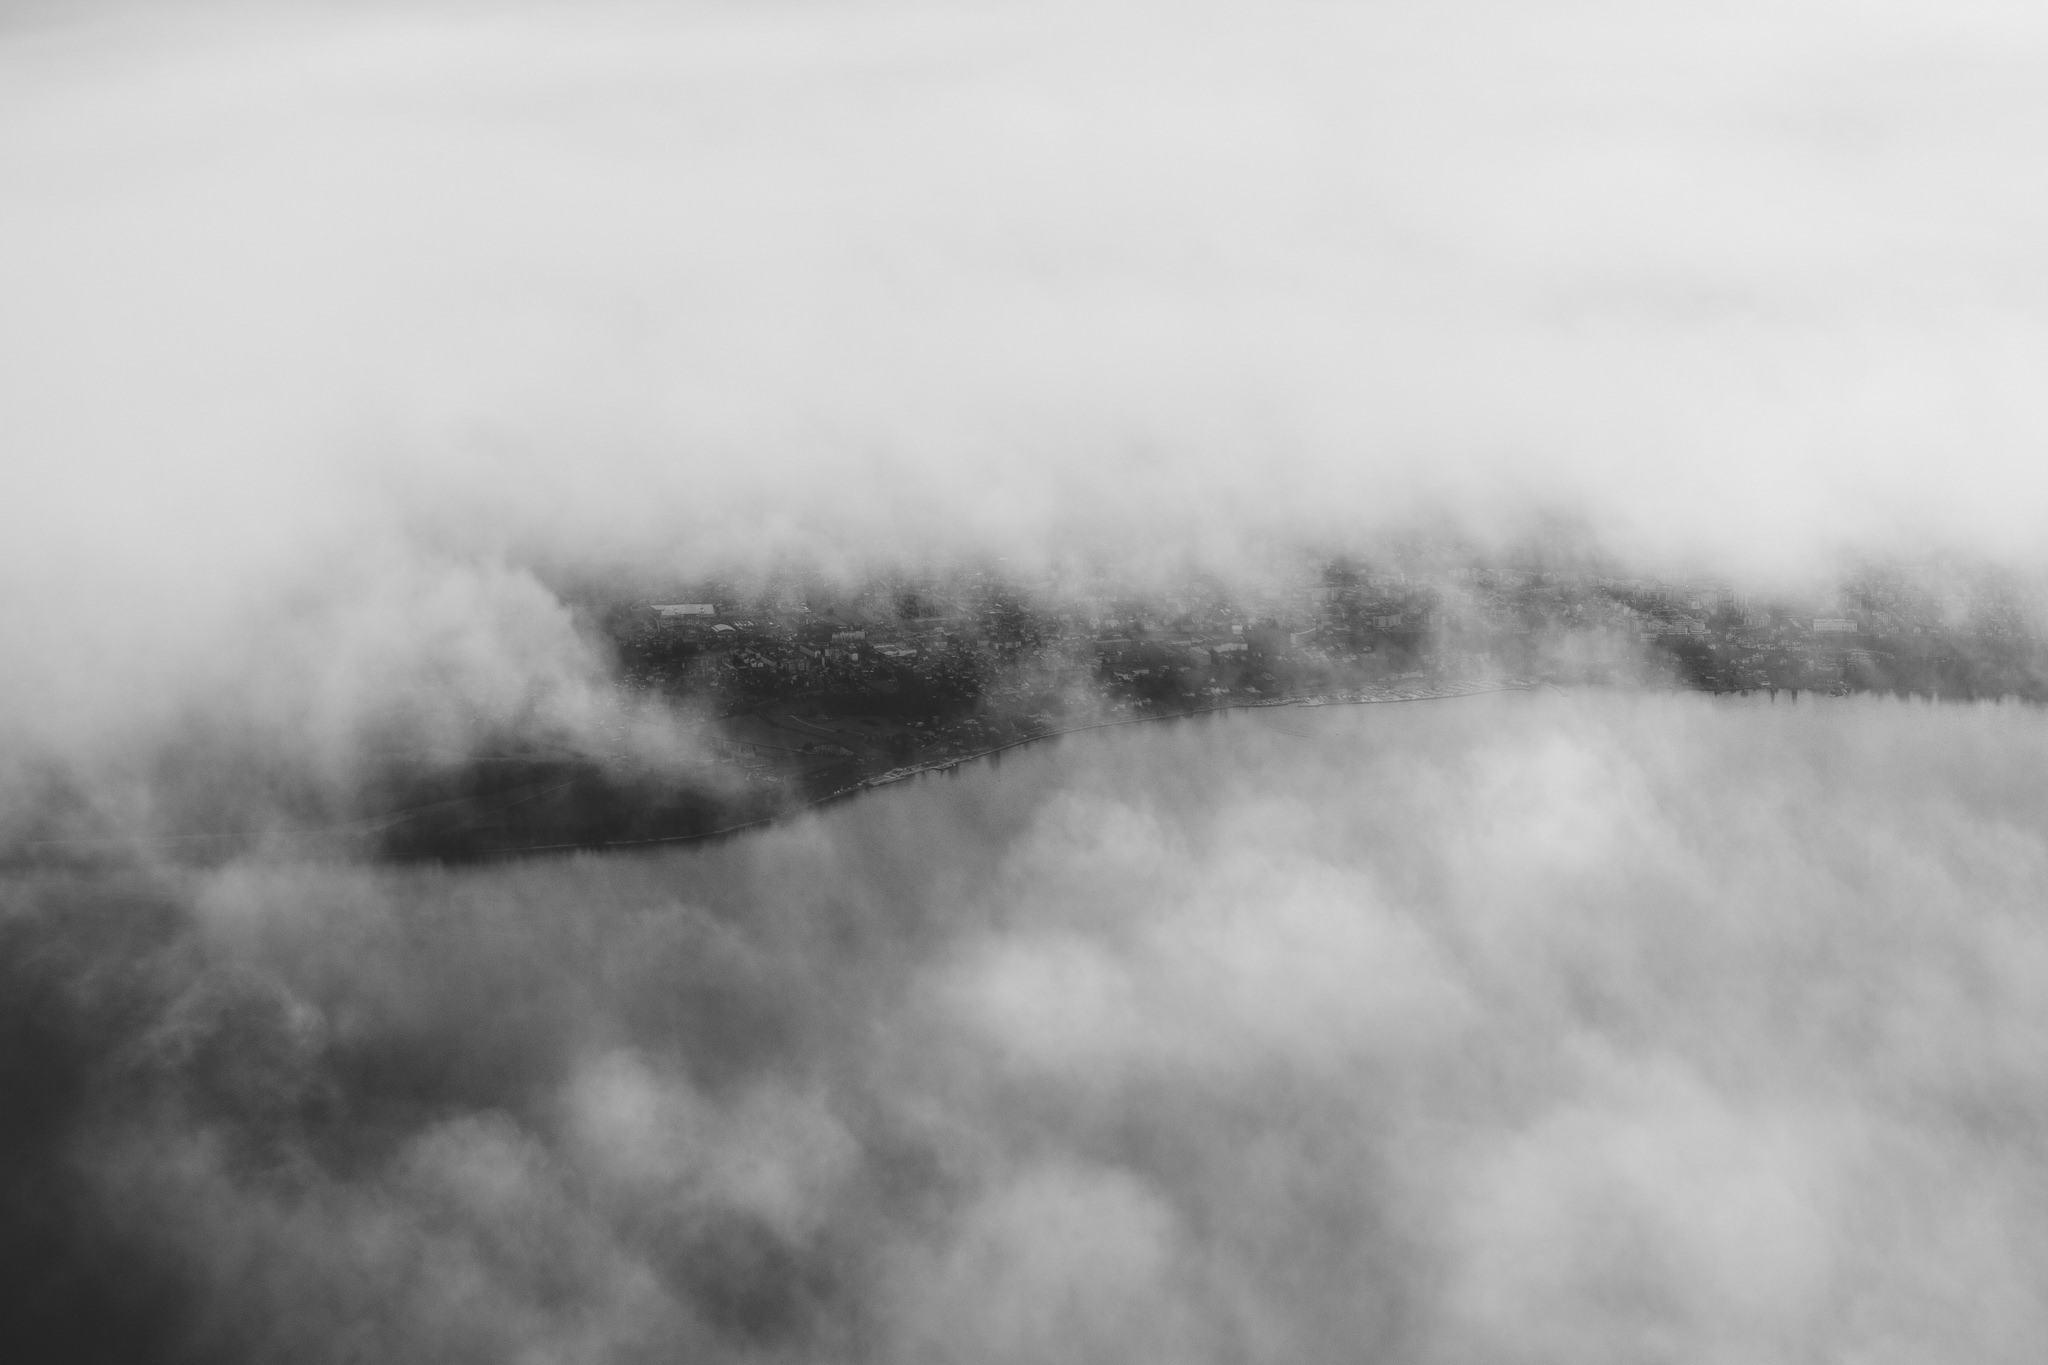   Flying into a misty Geneva  